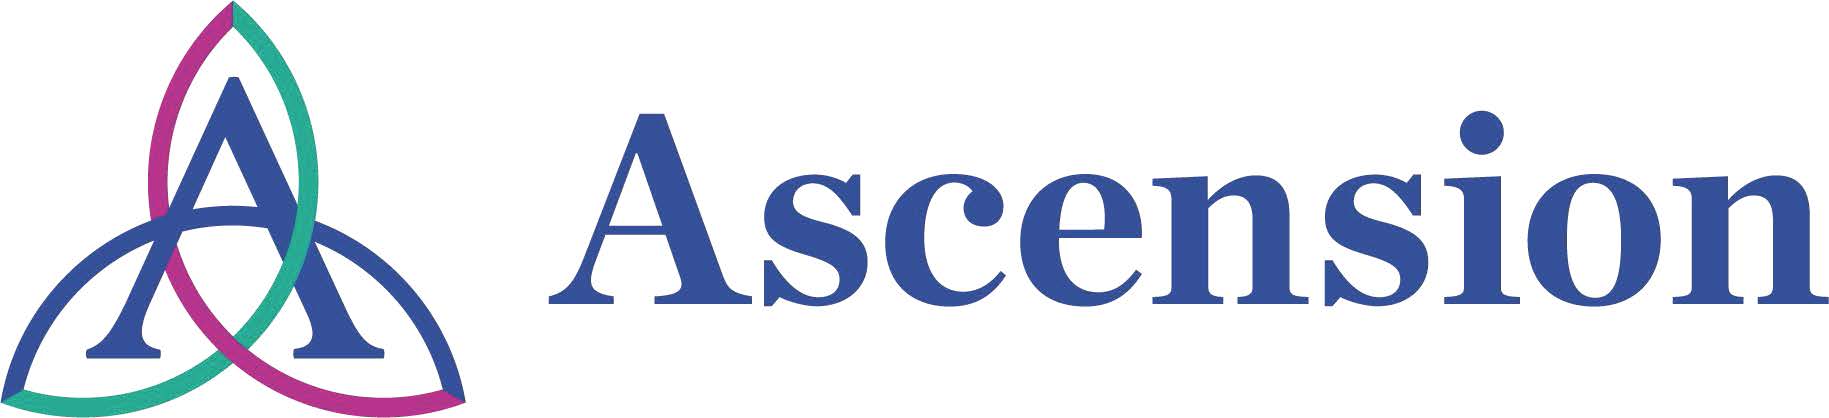 Ascension sponsor logo